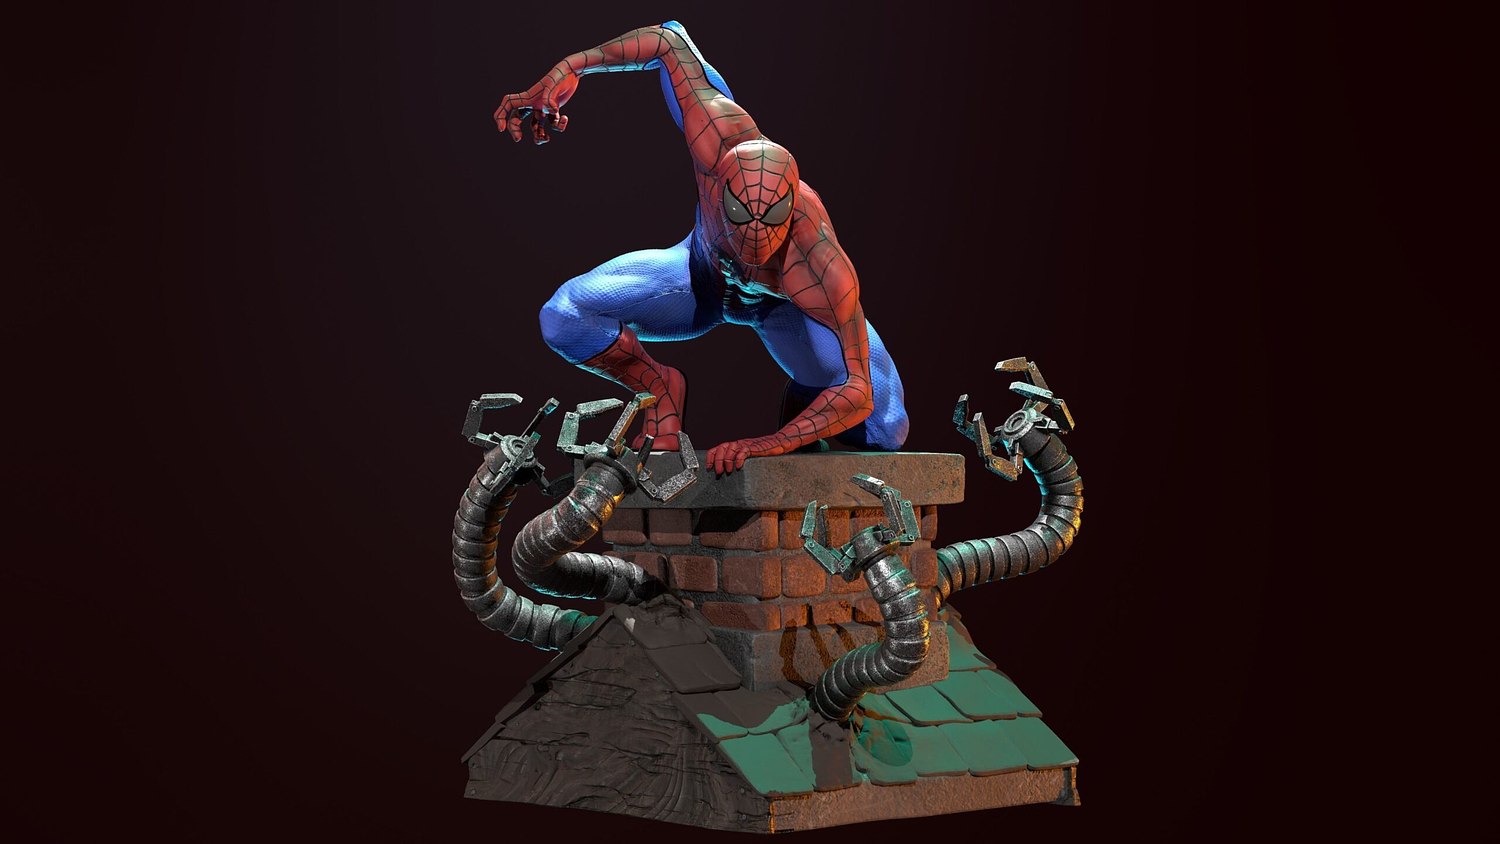 Spiderman on Chimney From Marvel